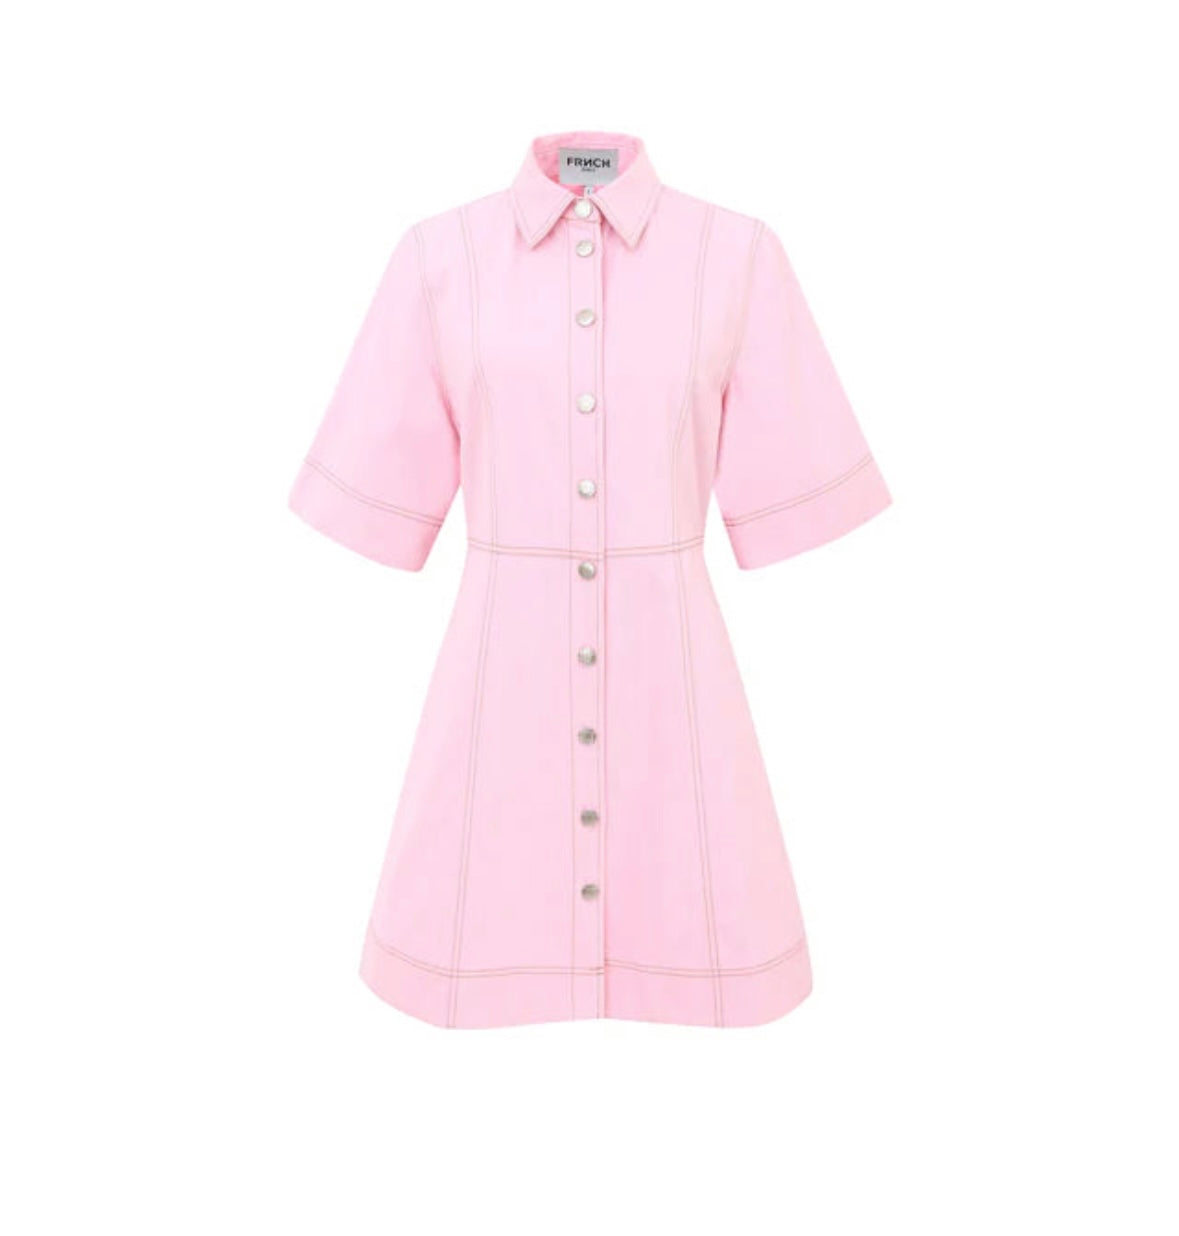 Pink Button Down Dress